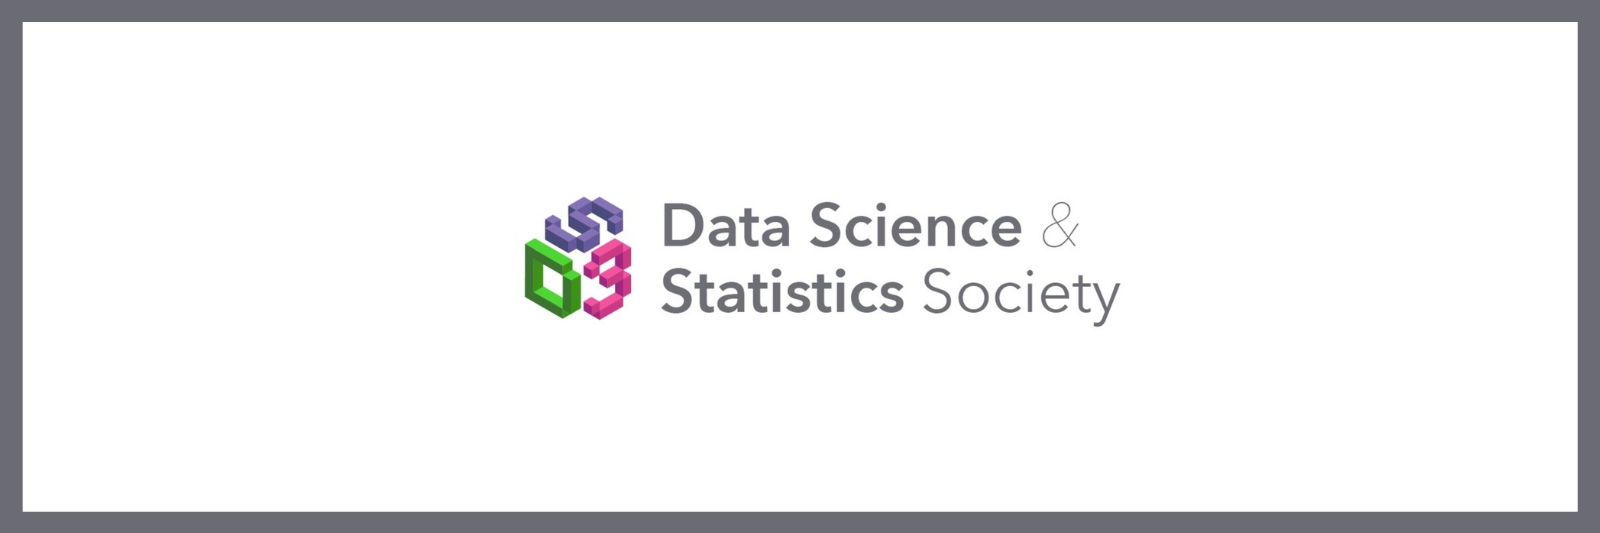 Data Science & Statistics Society